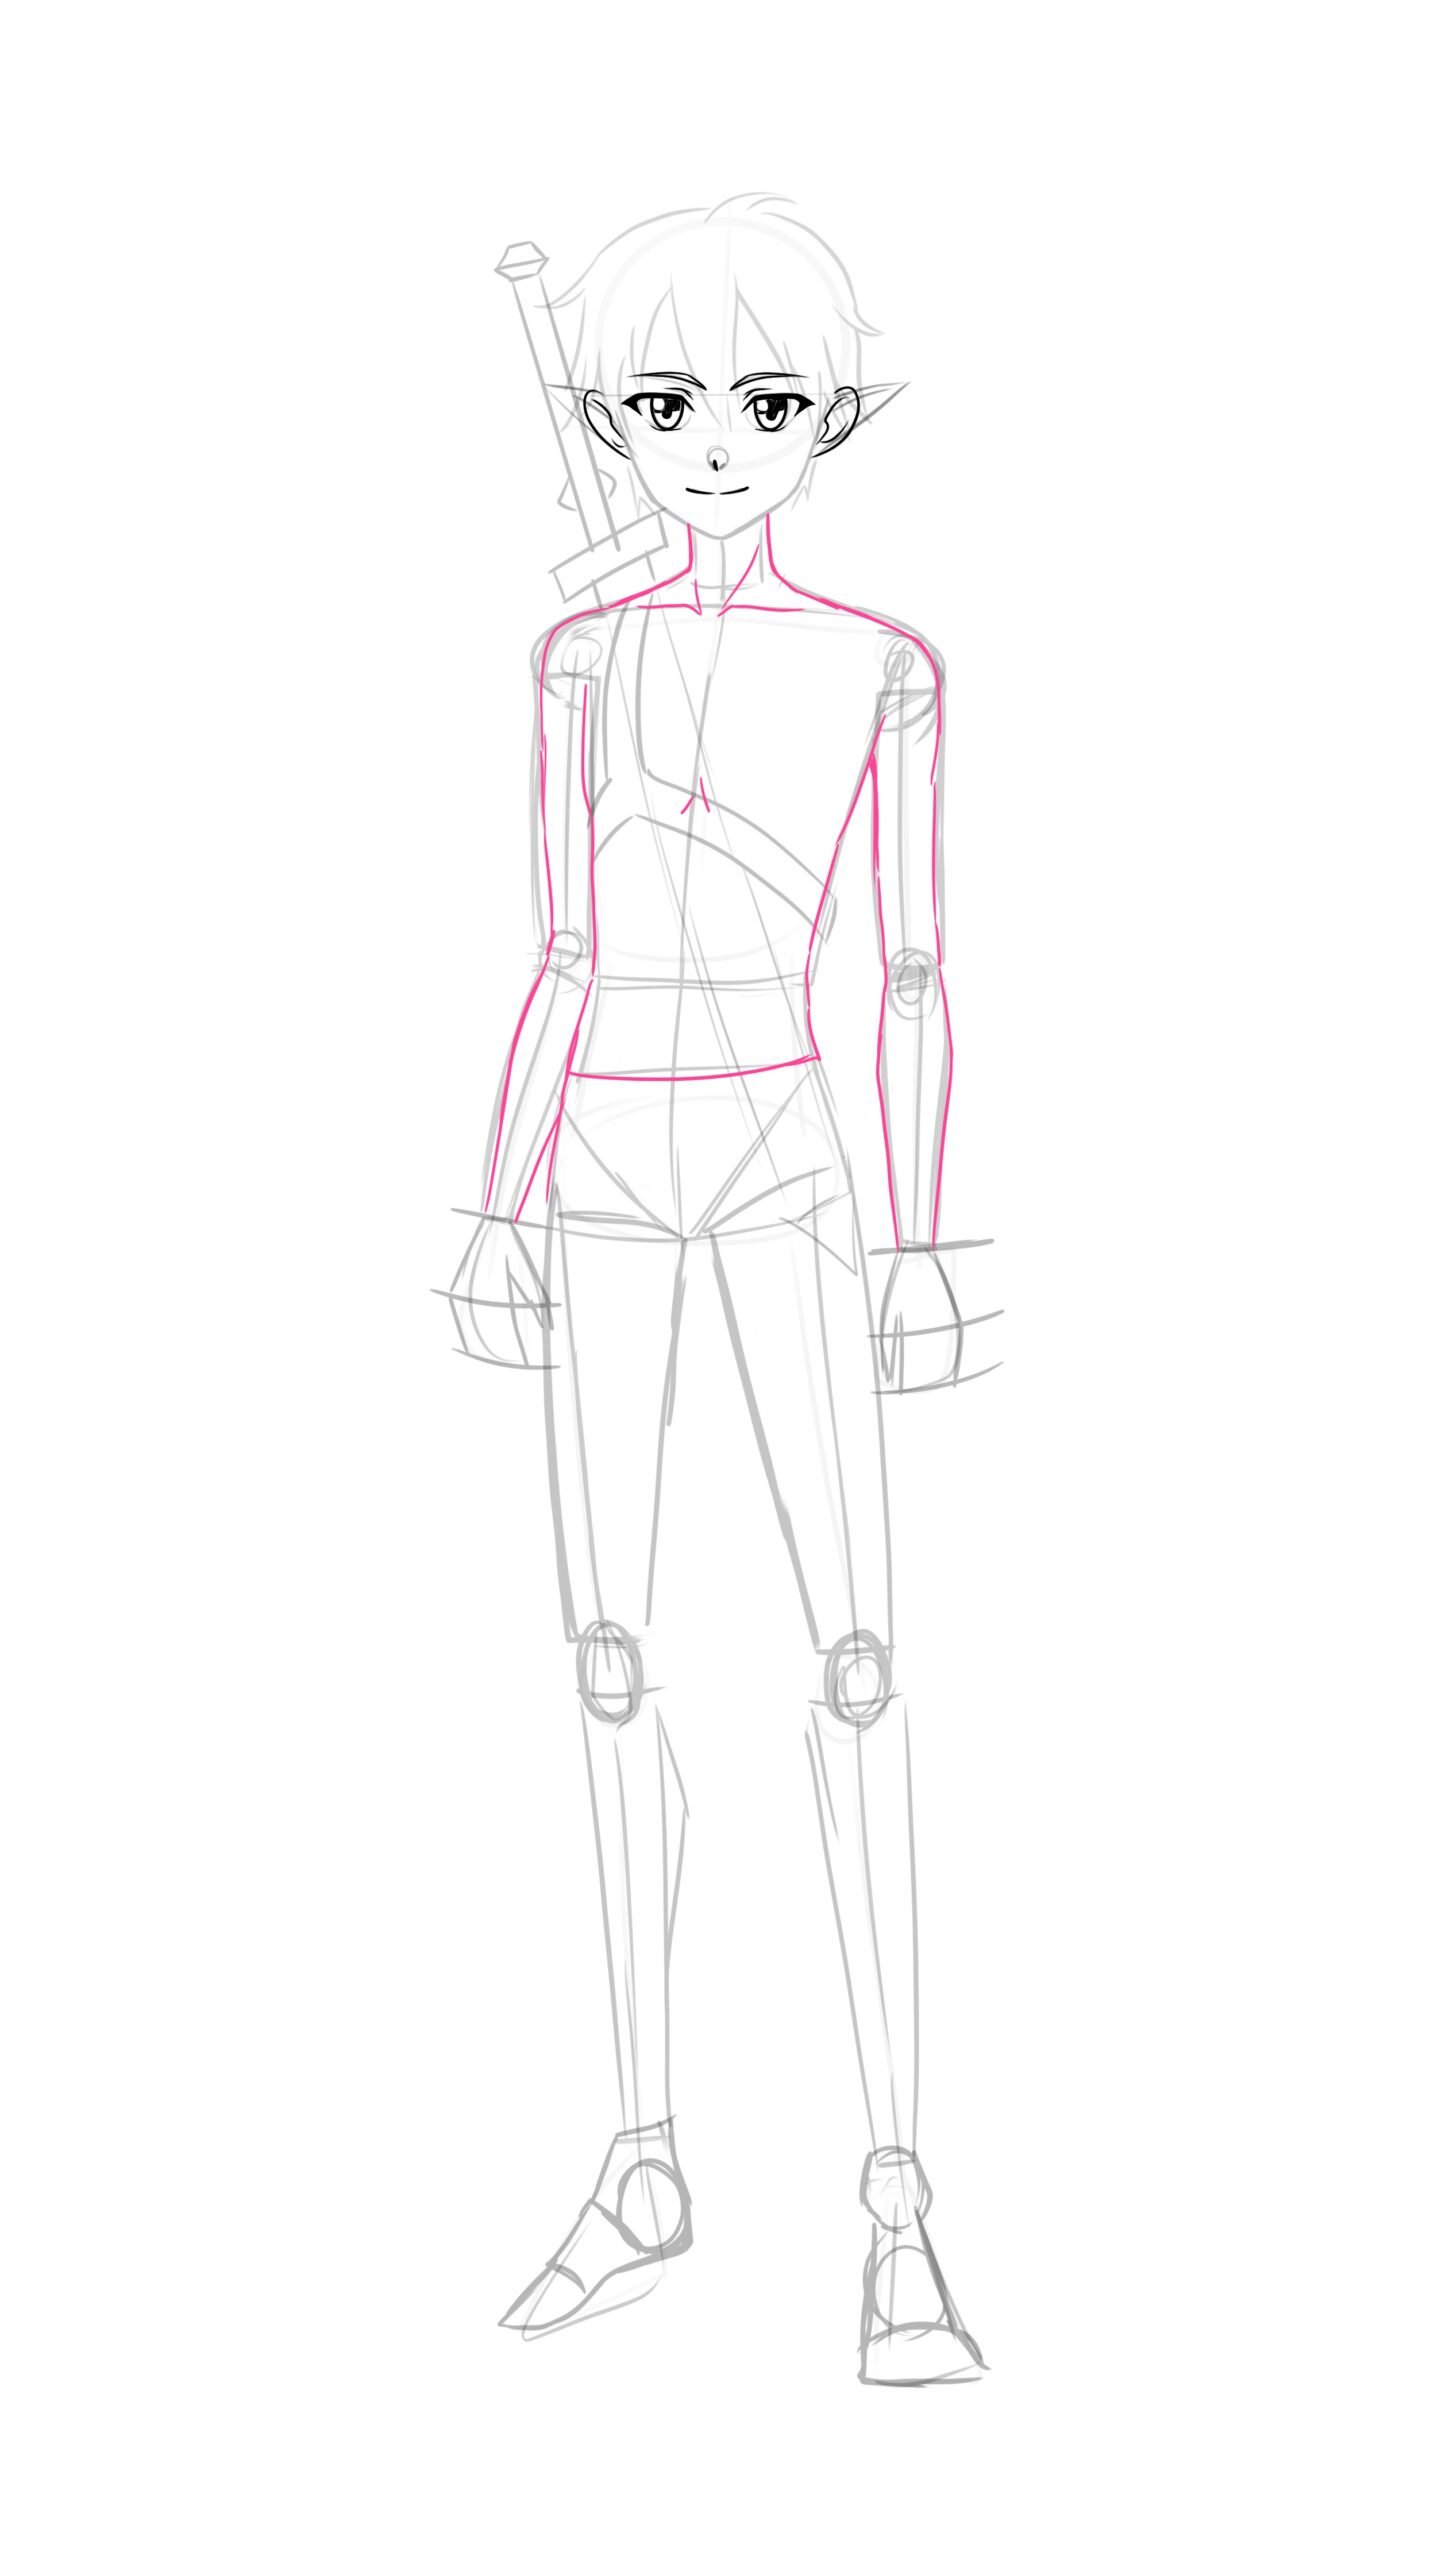 13) How to draw Kirito shoulders